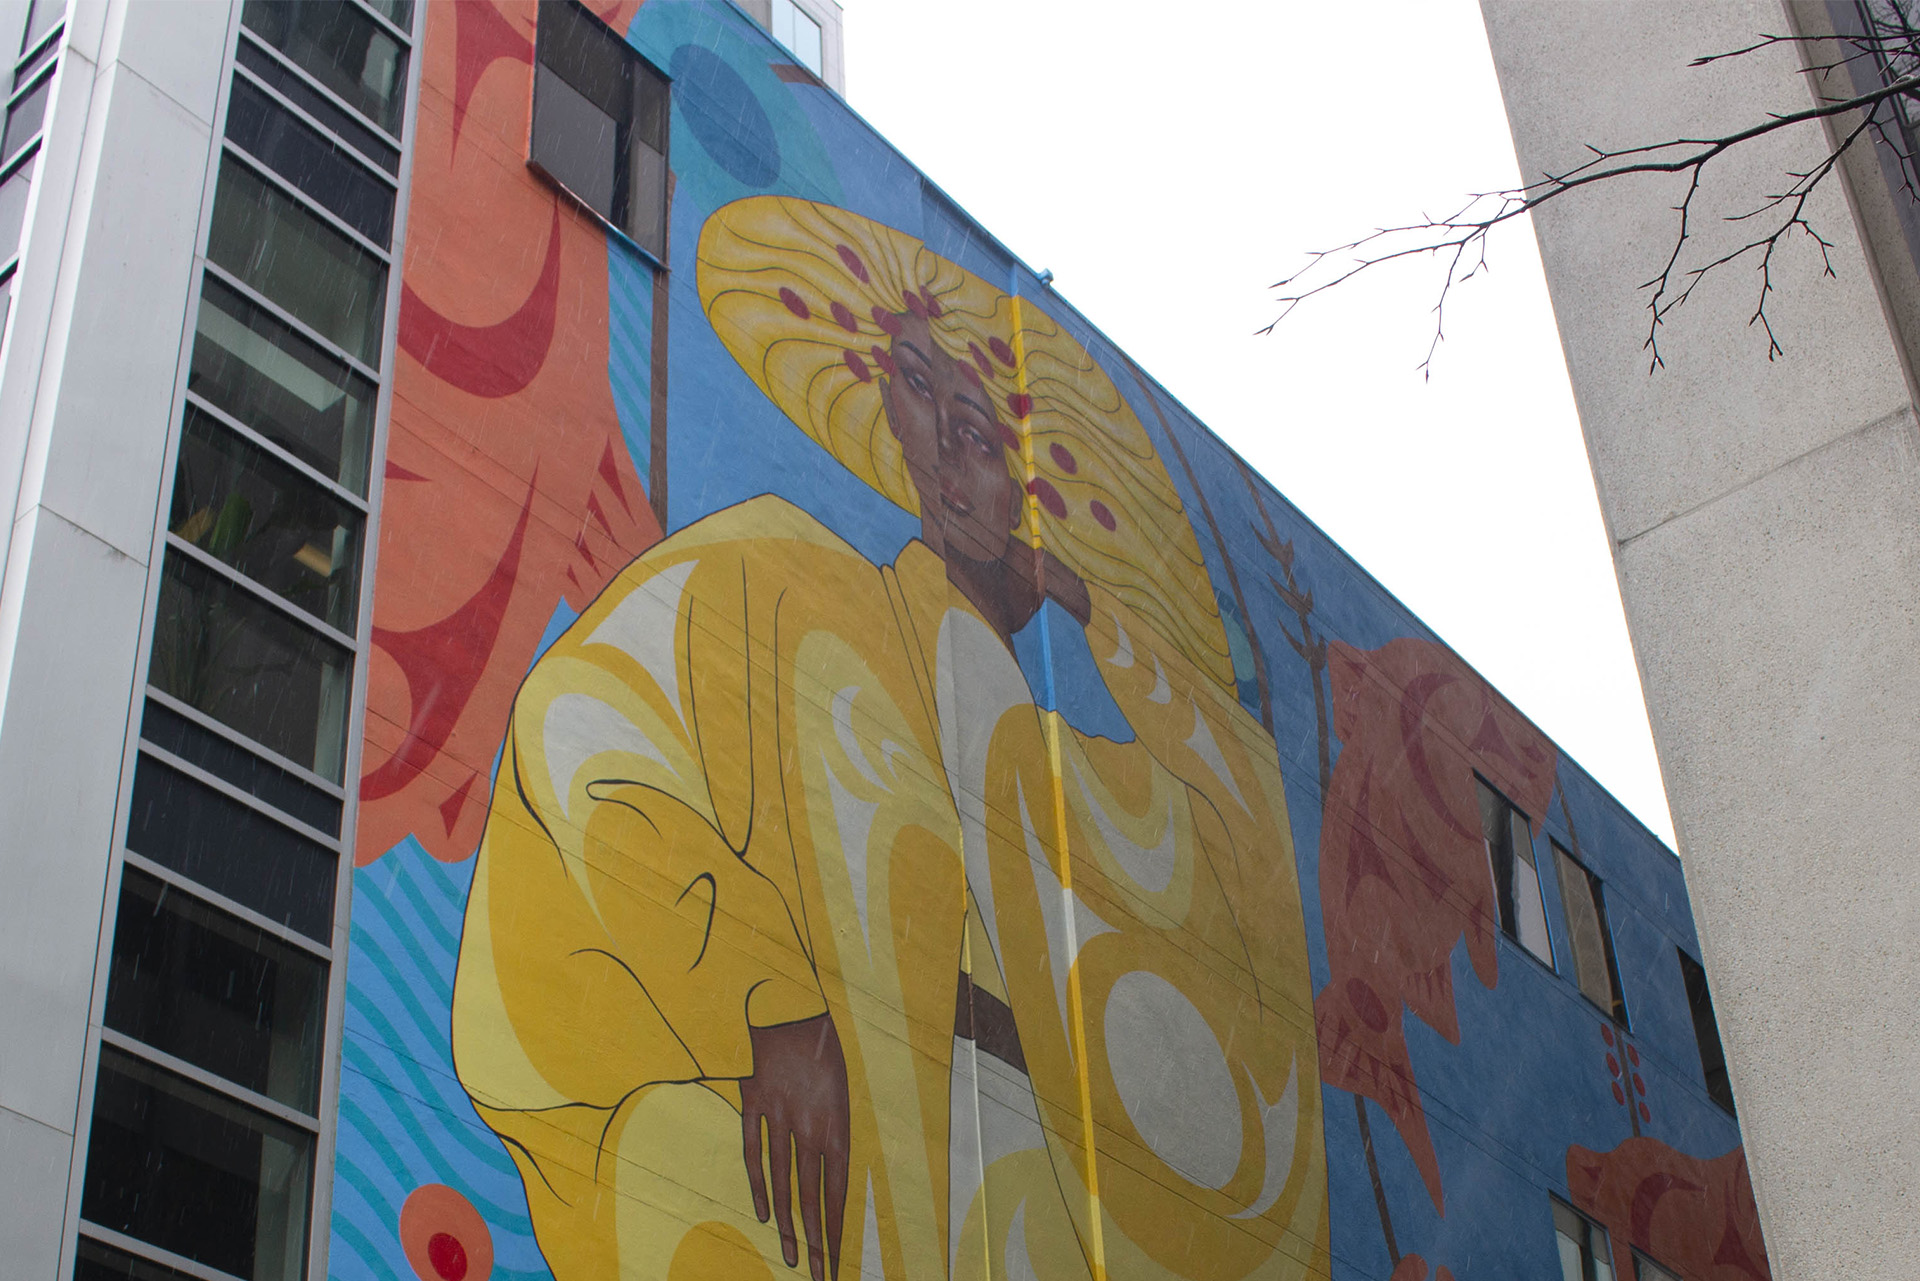 Snekwem Lane Indigenous art mural